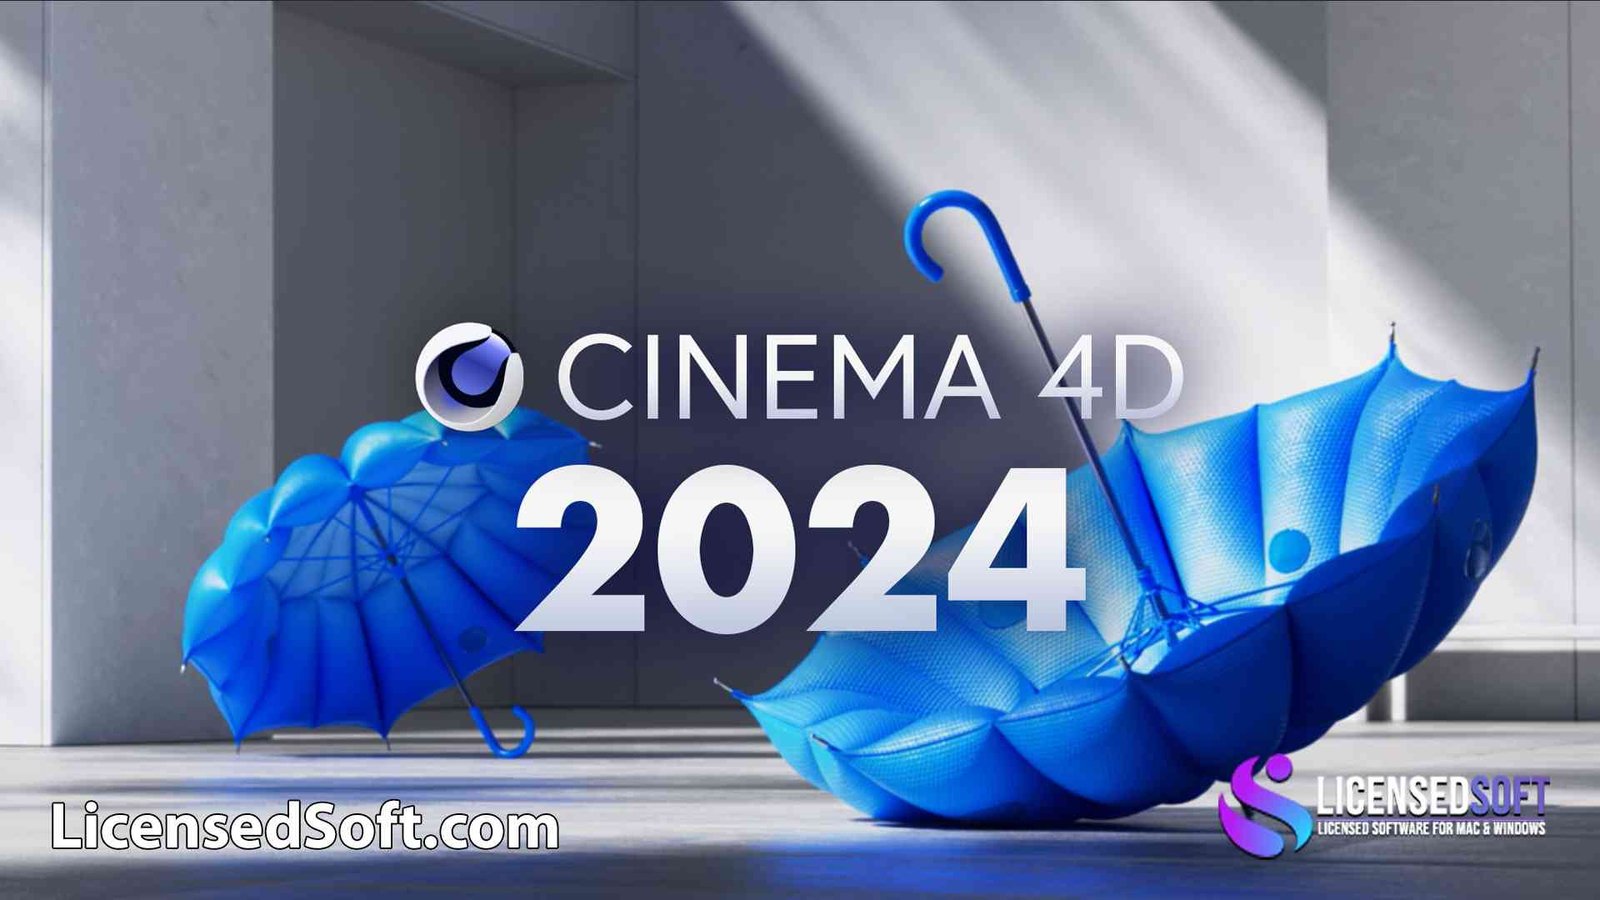 Maxon Cinema 4D Studio 2024 By LicensedSoft